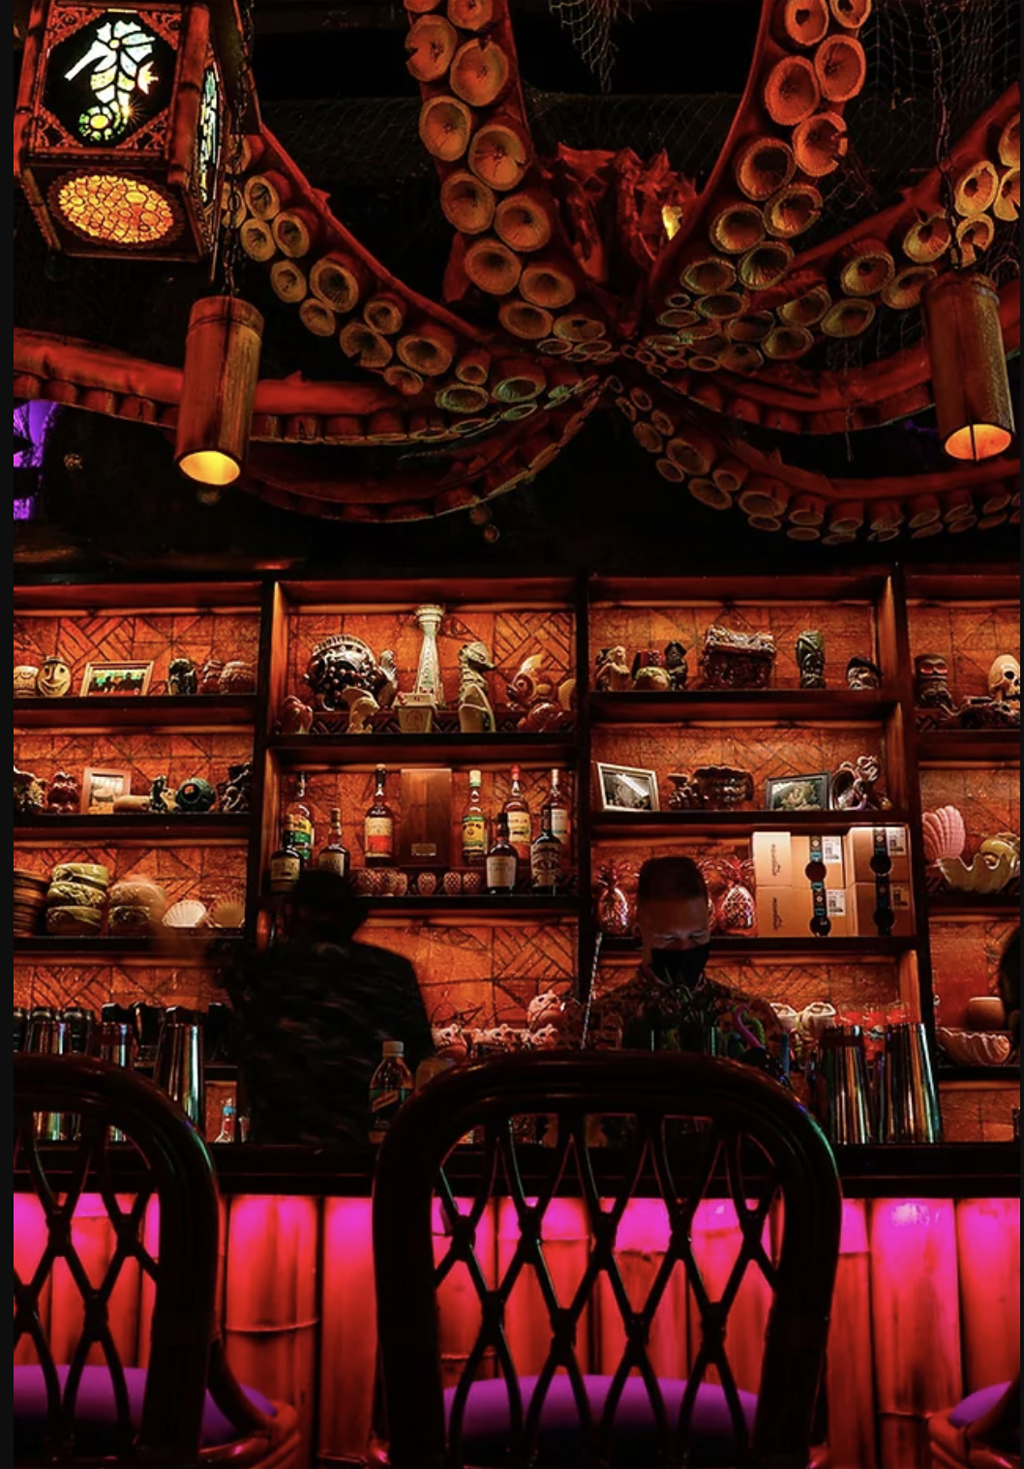 Inside Passage, a tropical themed bar